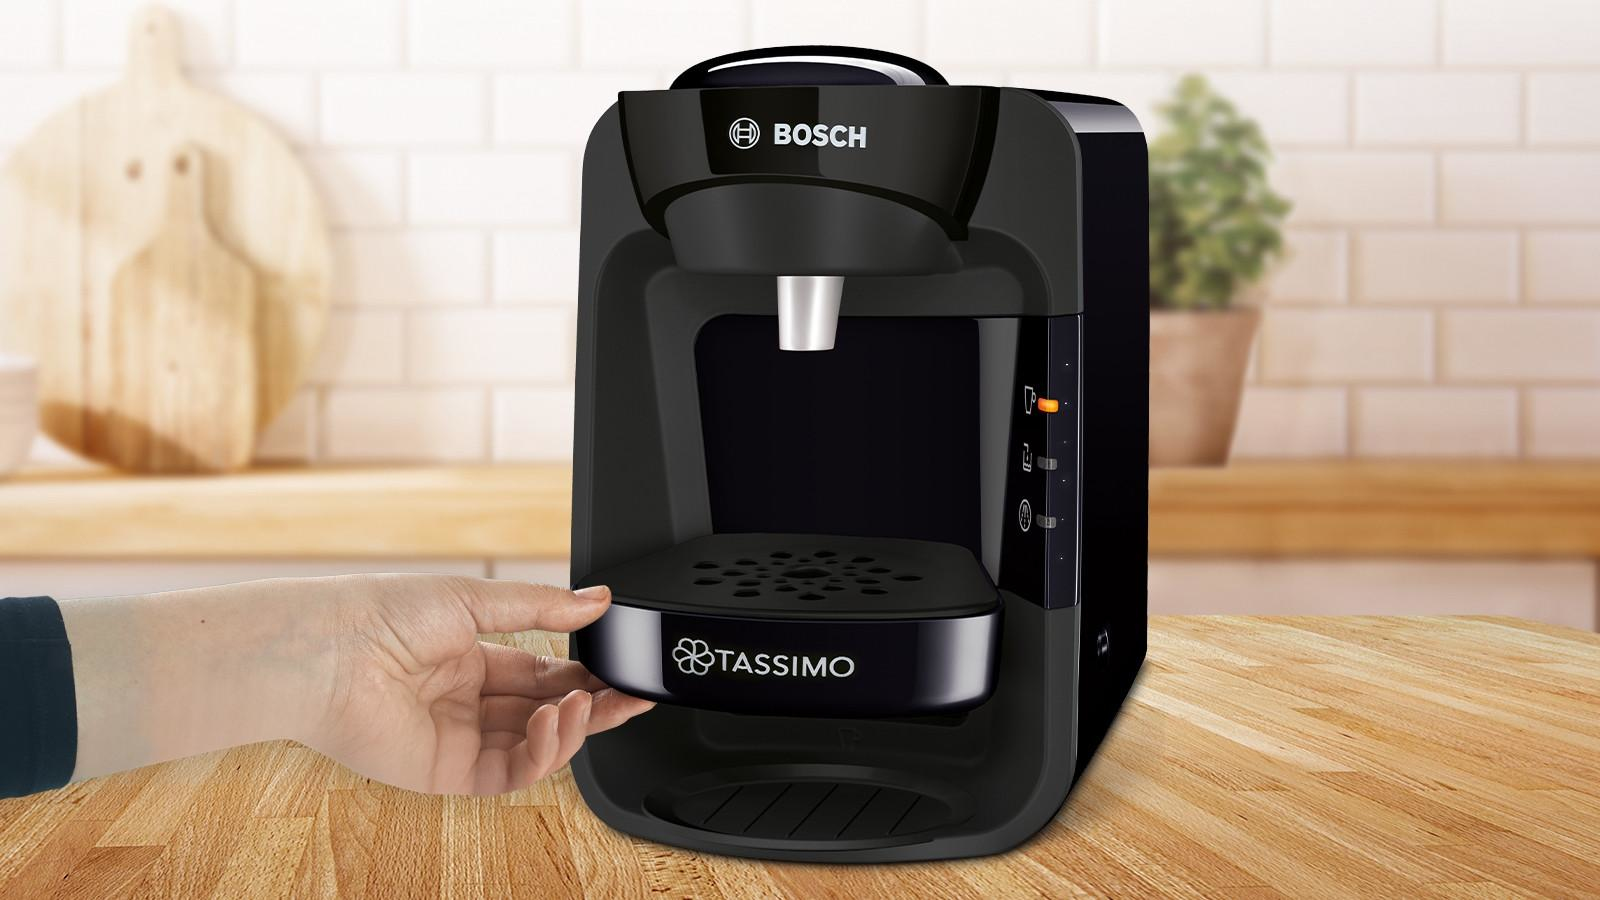 Bosch TAS3102 coffee maker